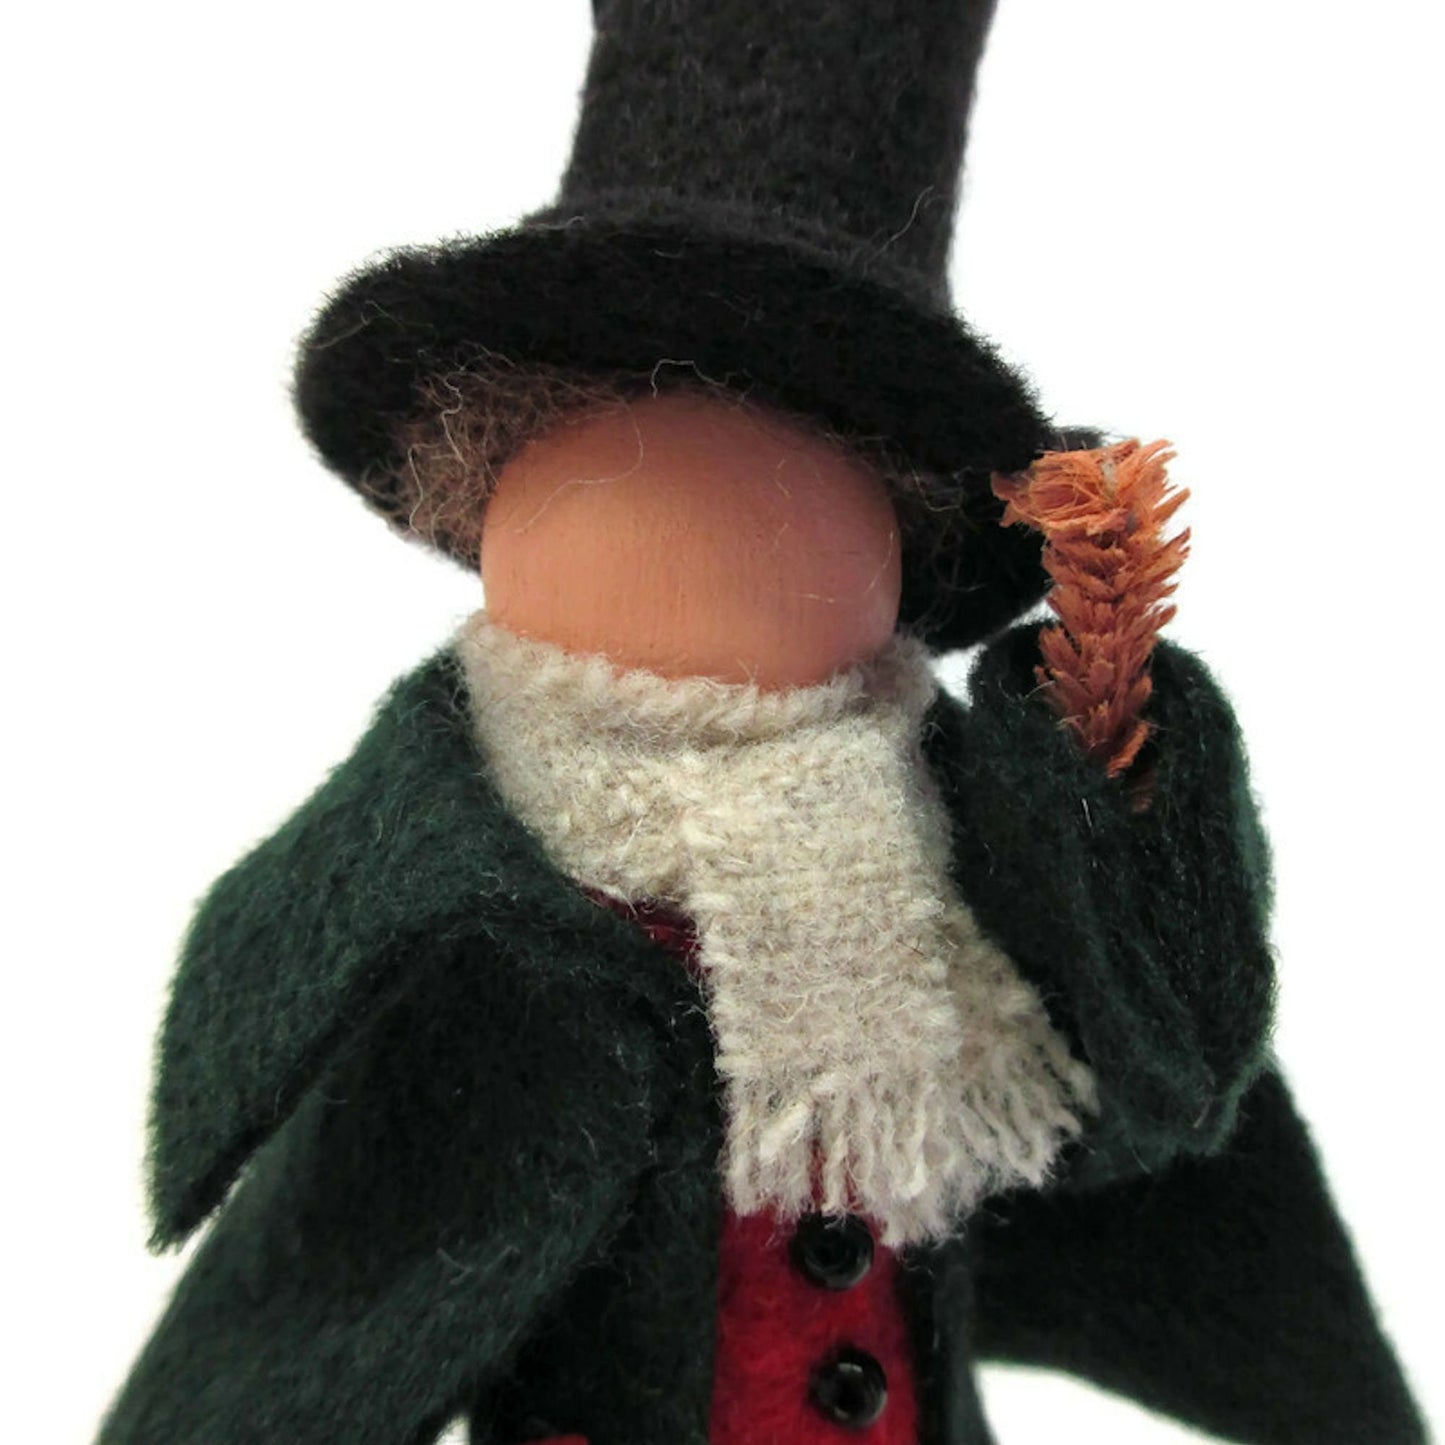 Scrooge's Nephew Fred